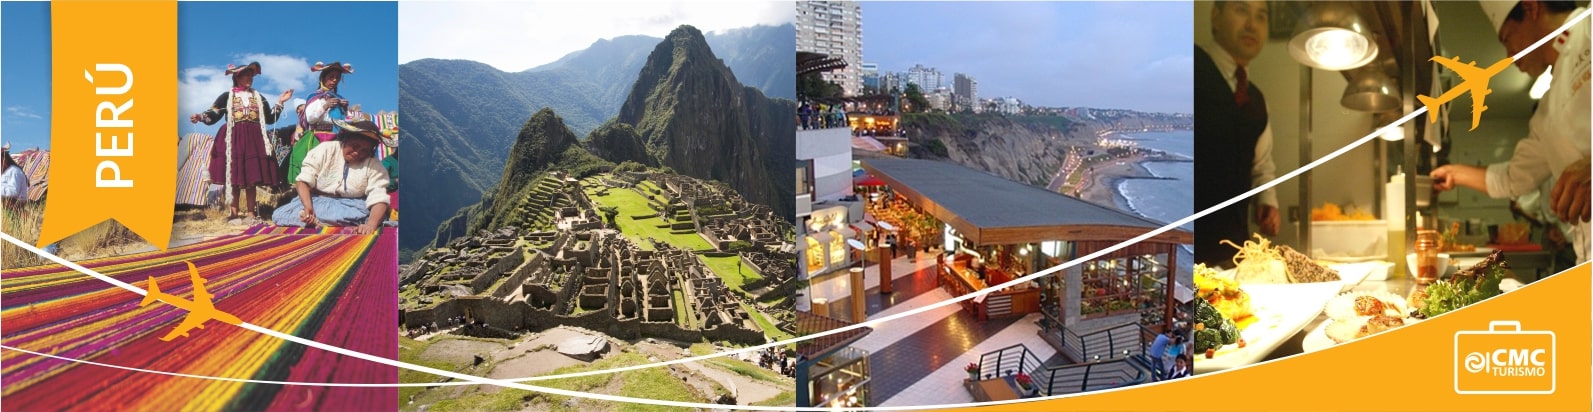 cabecera para pdf excursiones Peru CMC Turismo-min